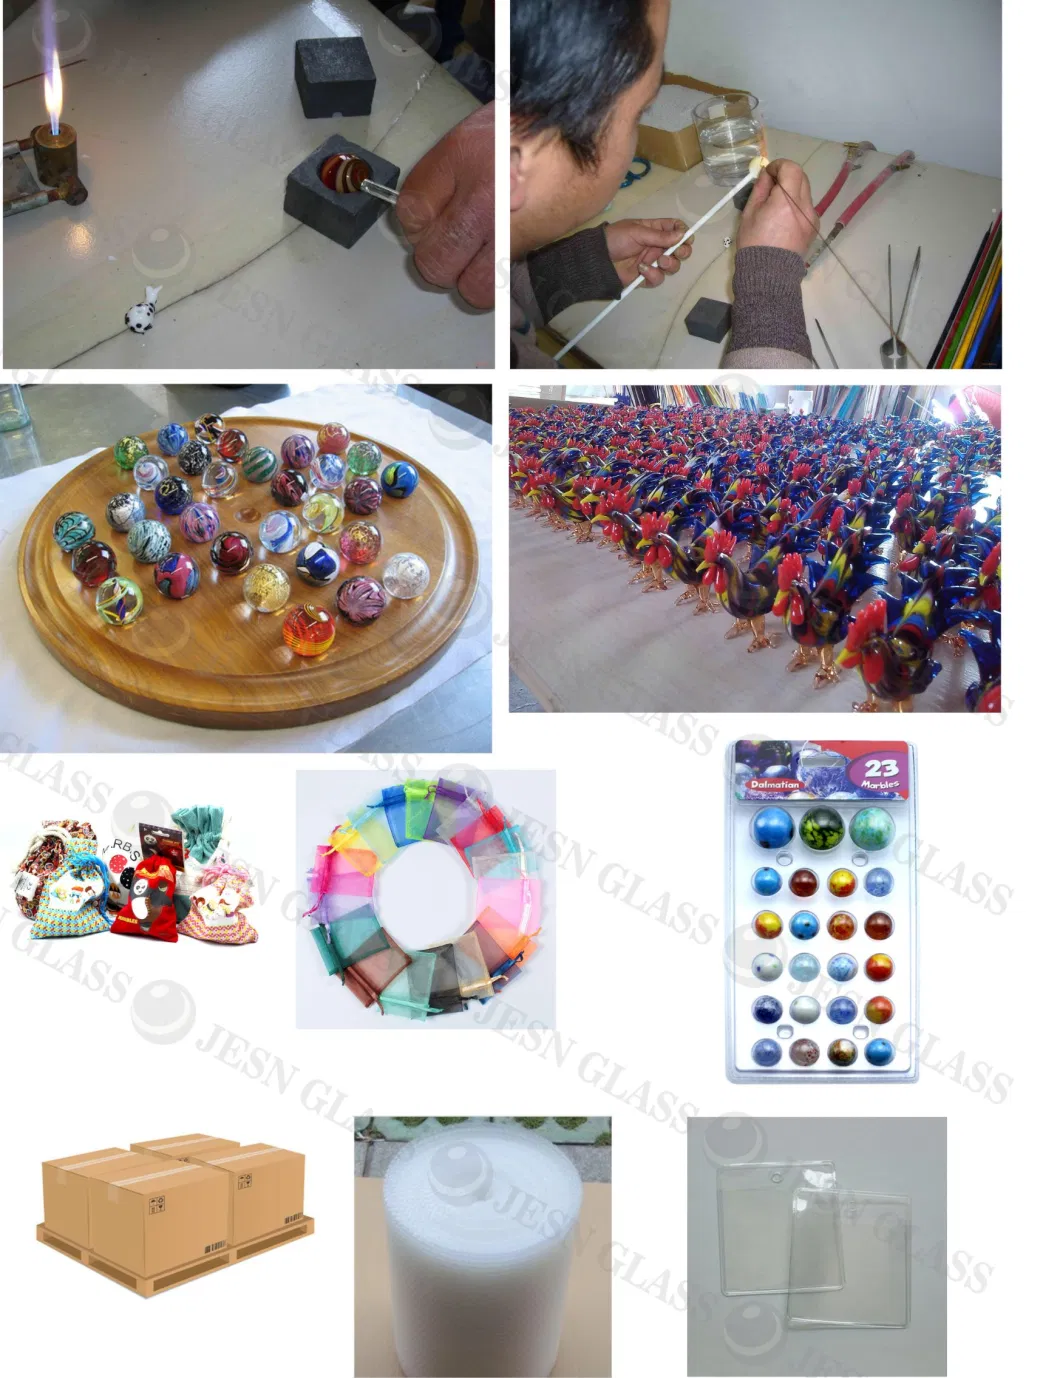 Glass Marble, Children Toys, Glass Ball, Hand Made Tin Box Stress Ball